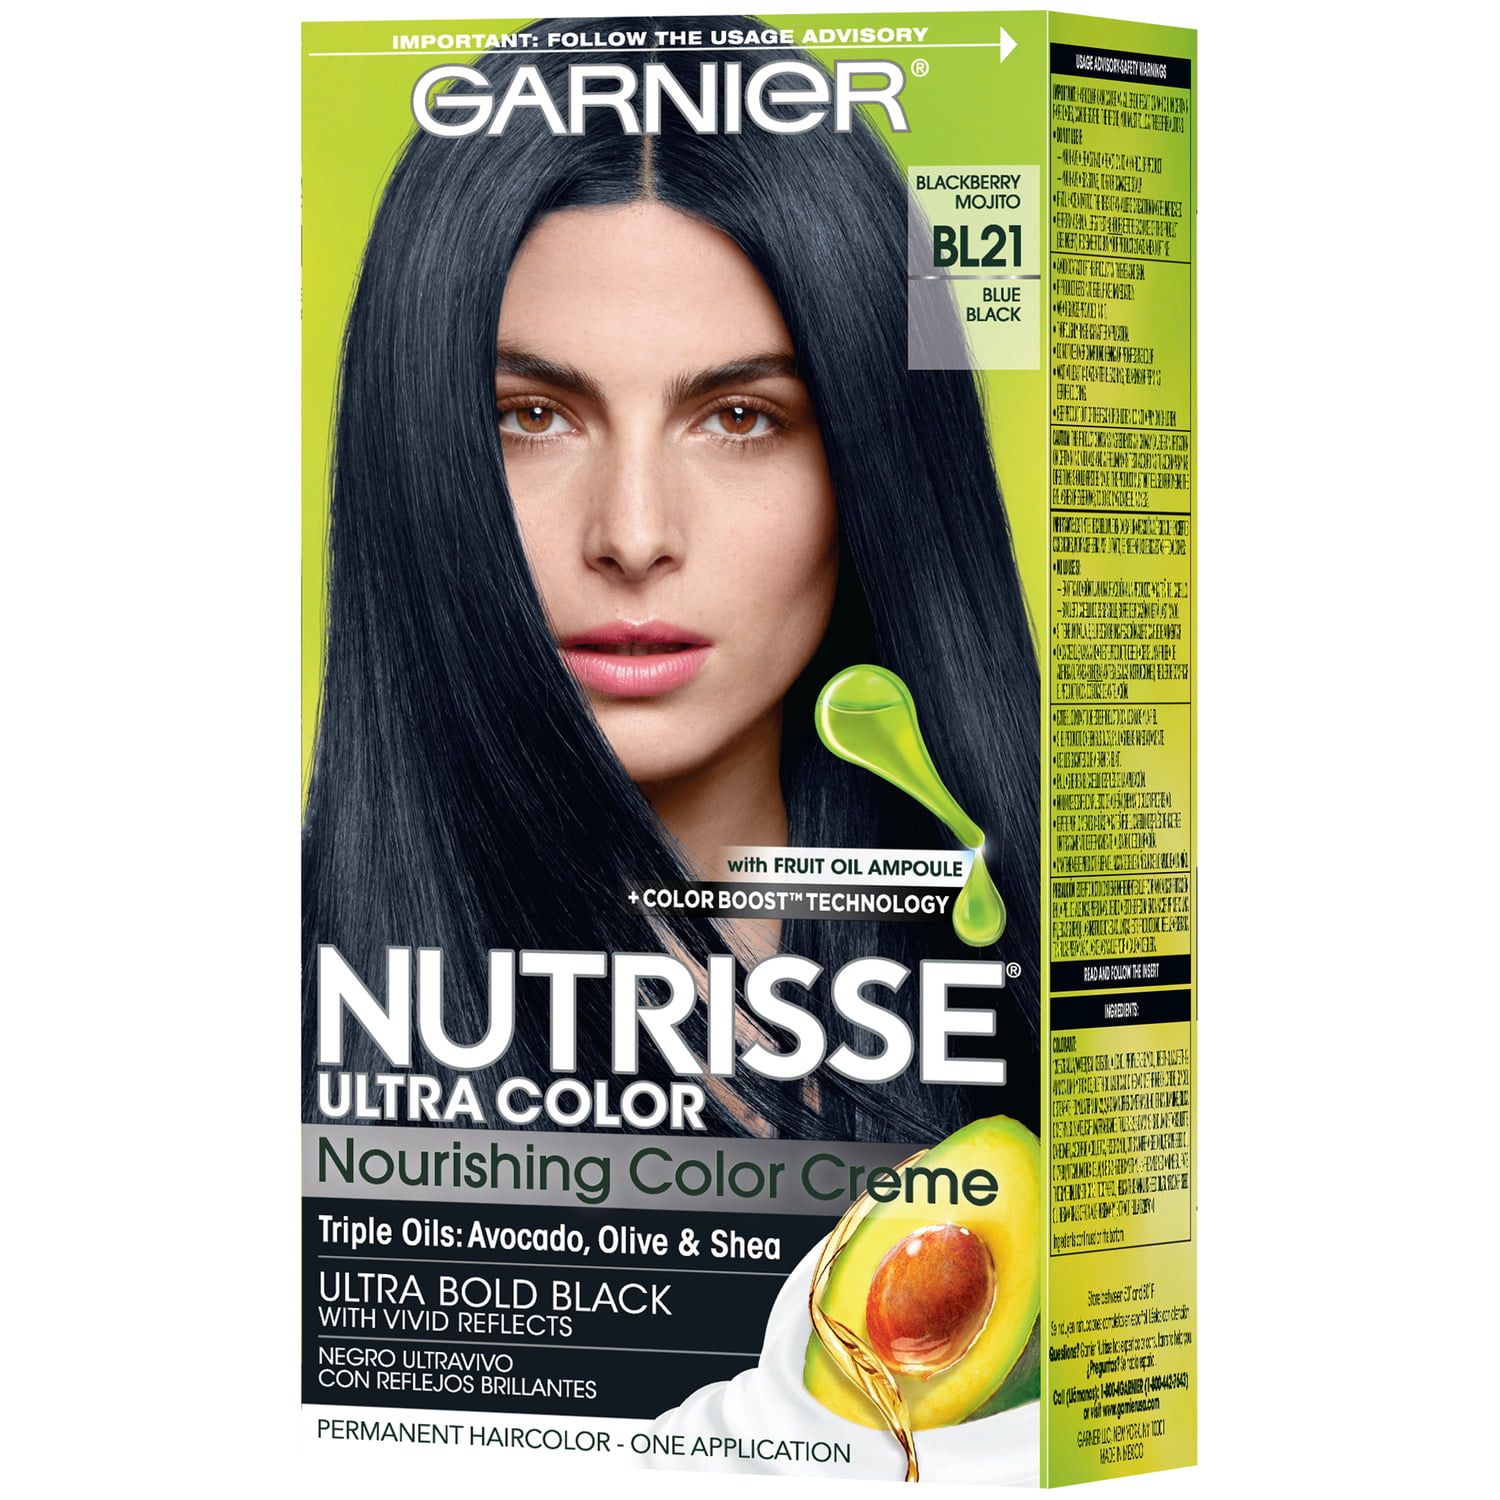 Garnier Nutrisse Nourishing Color Creme 22 Intense Blue Black 1 ea  Kiwla